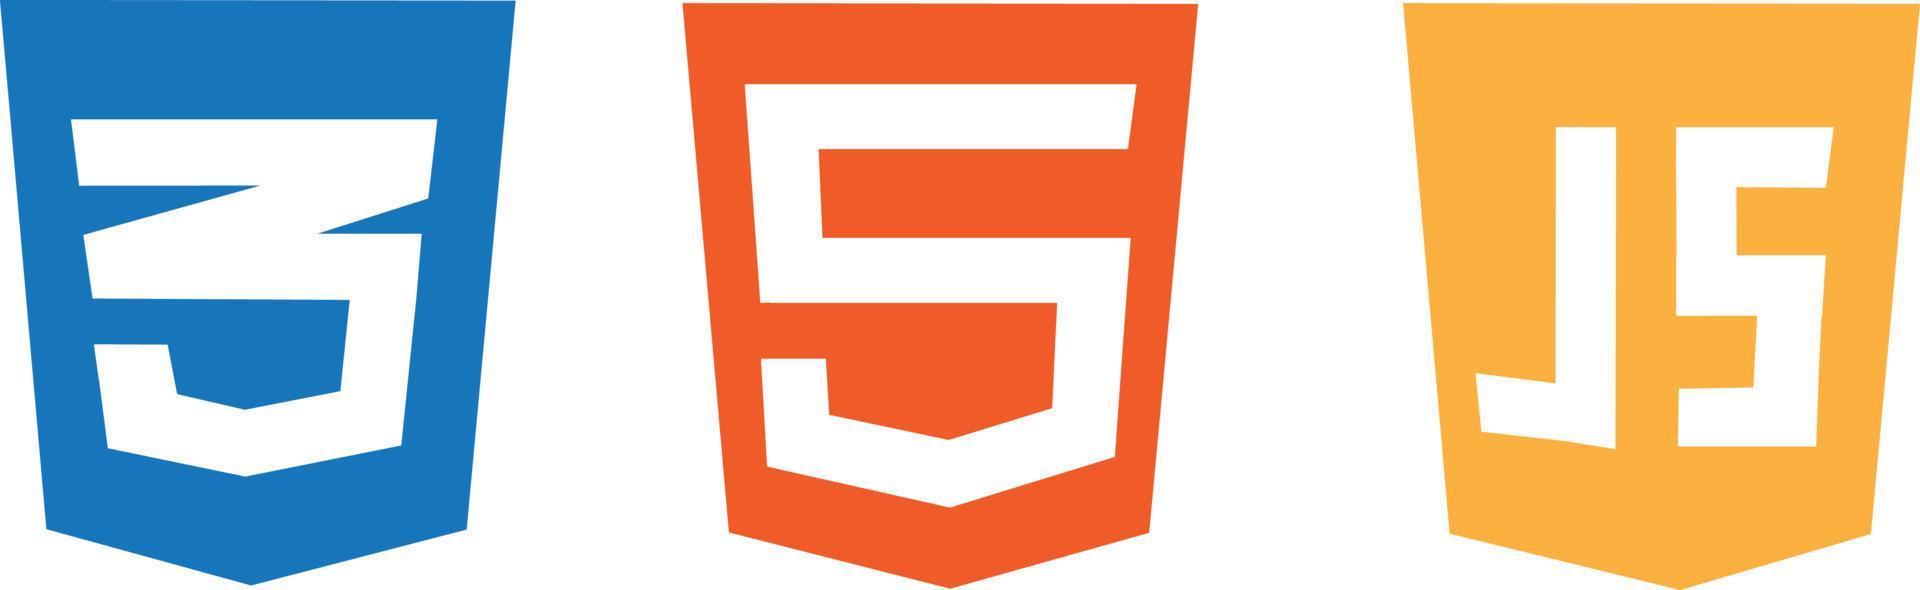 HTML5 CSS3 JS icon set. Web development logo icon set of html, css and javascript, programming symbol. vector